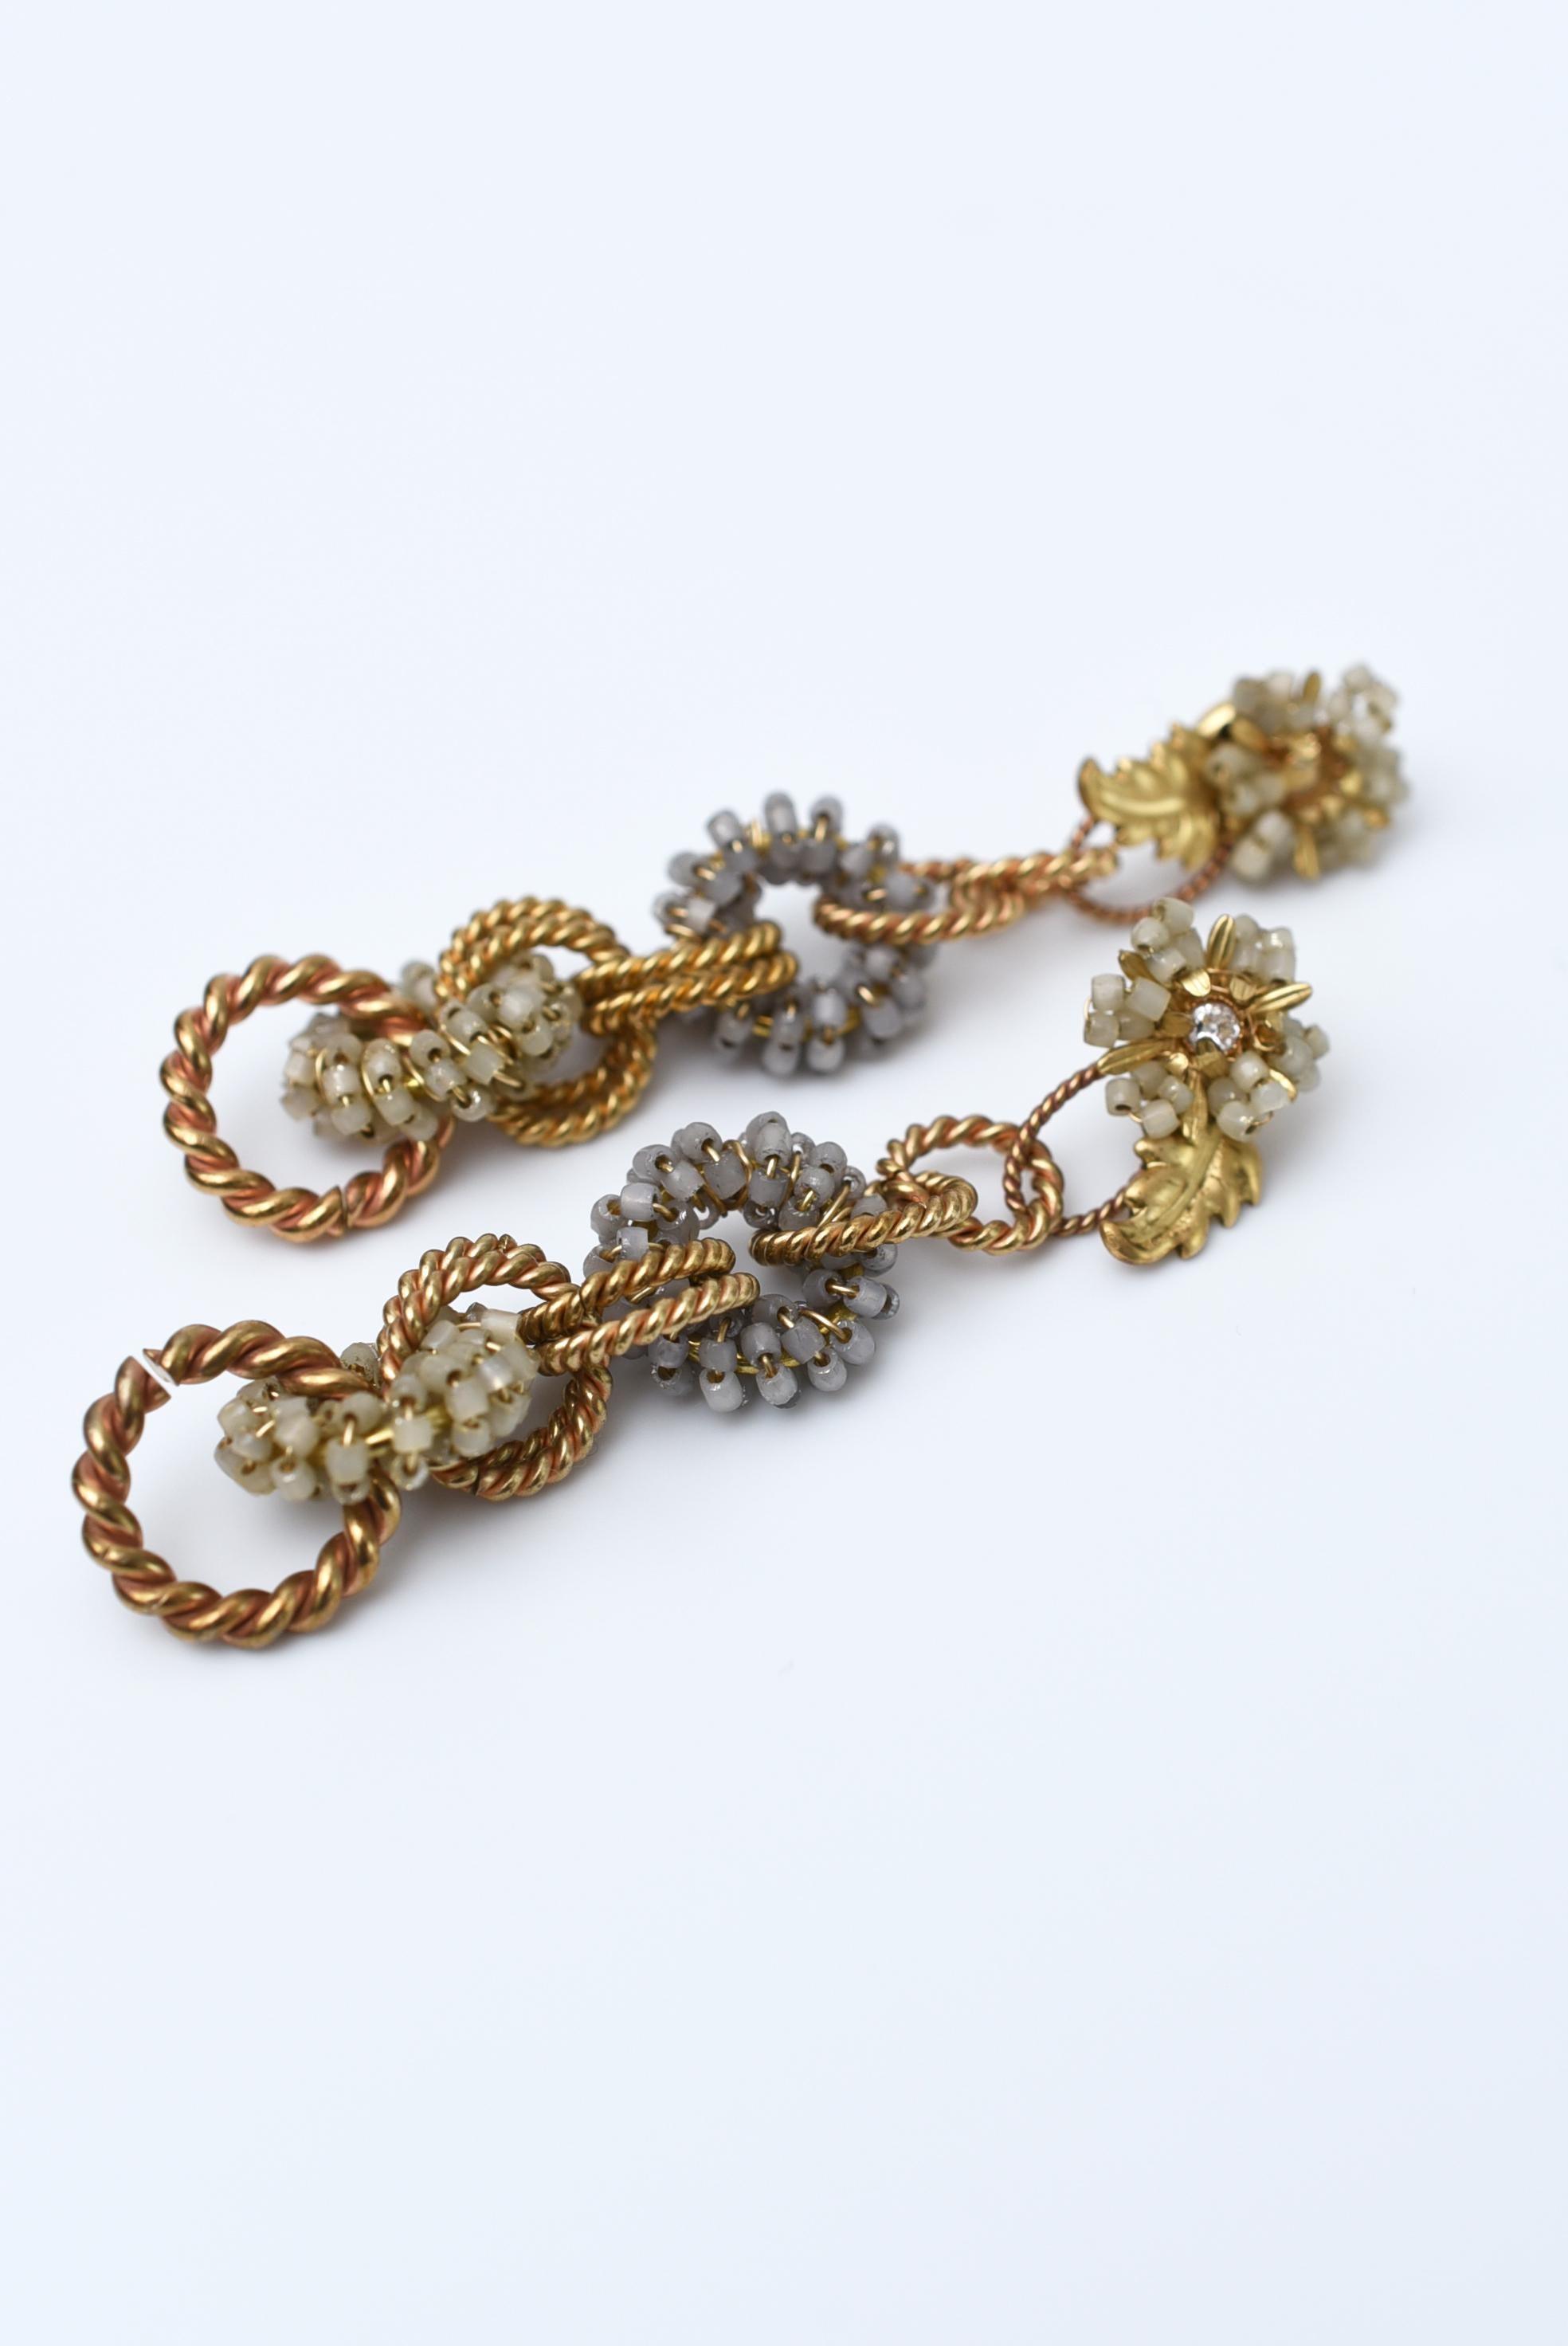 material:swarovski,vintage parts,glass beads,brass,vintage parts 1960S
size:length 7cm